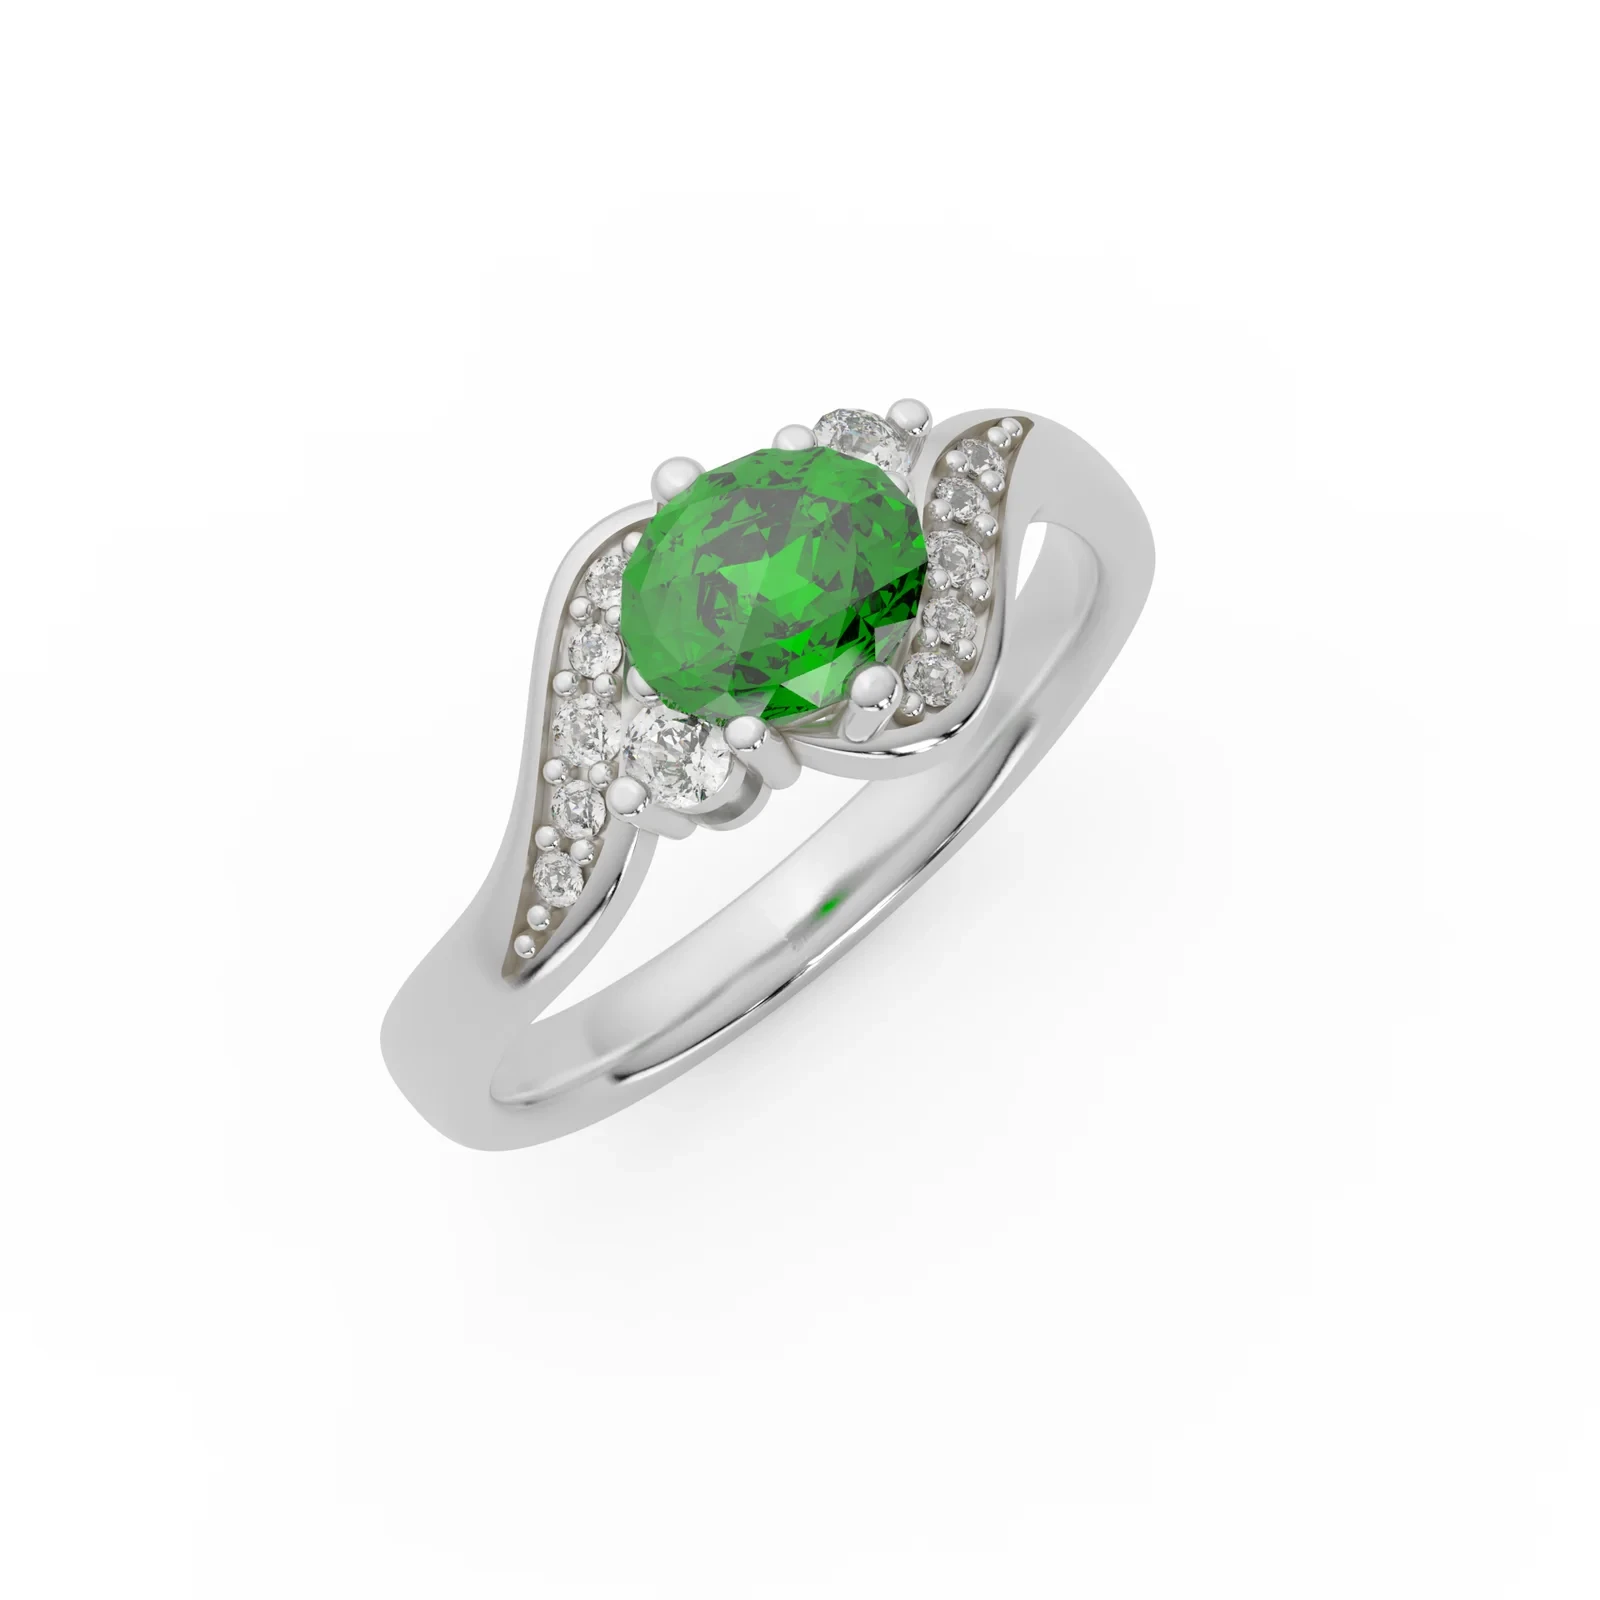 Quirky Swirl Emerald Ring